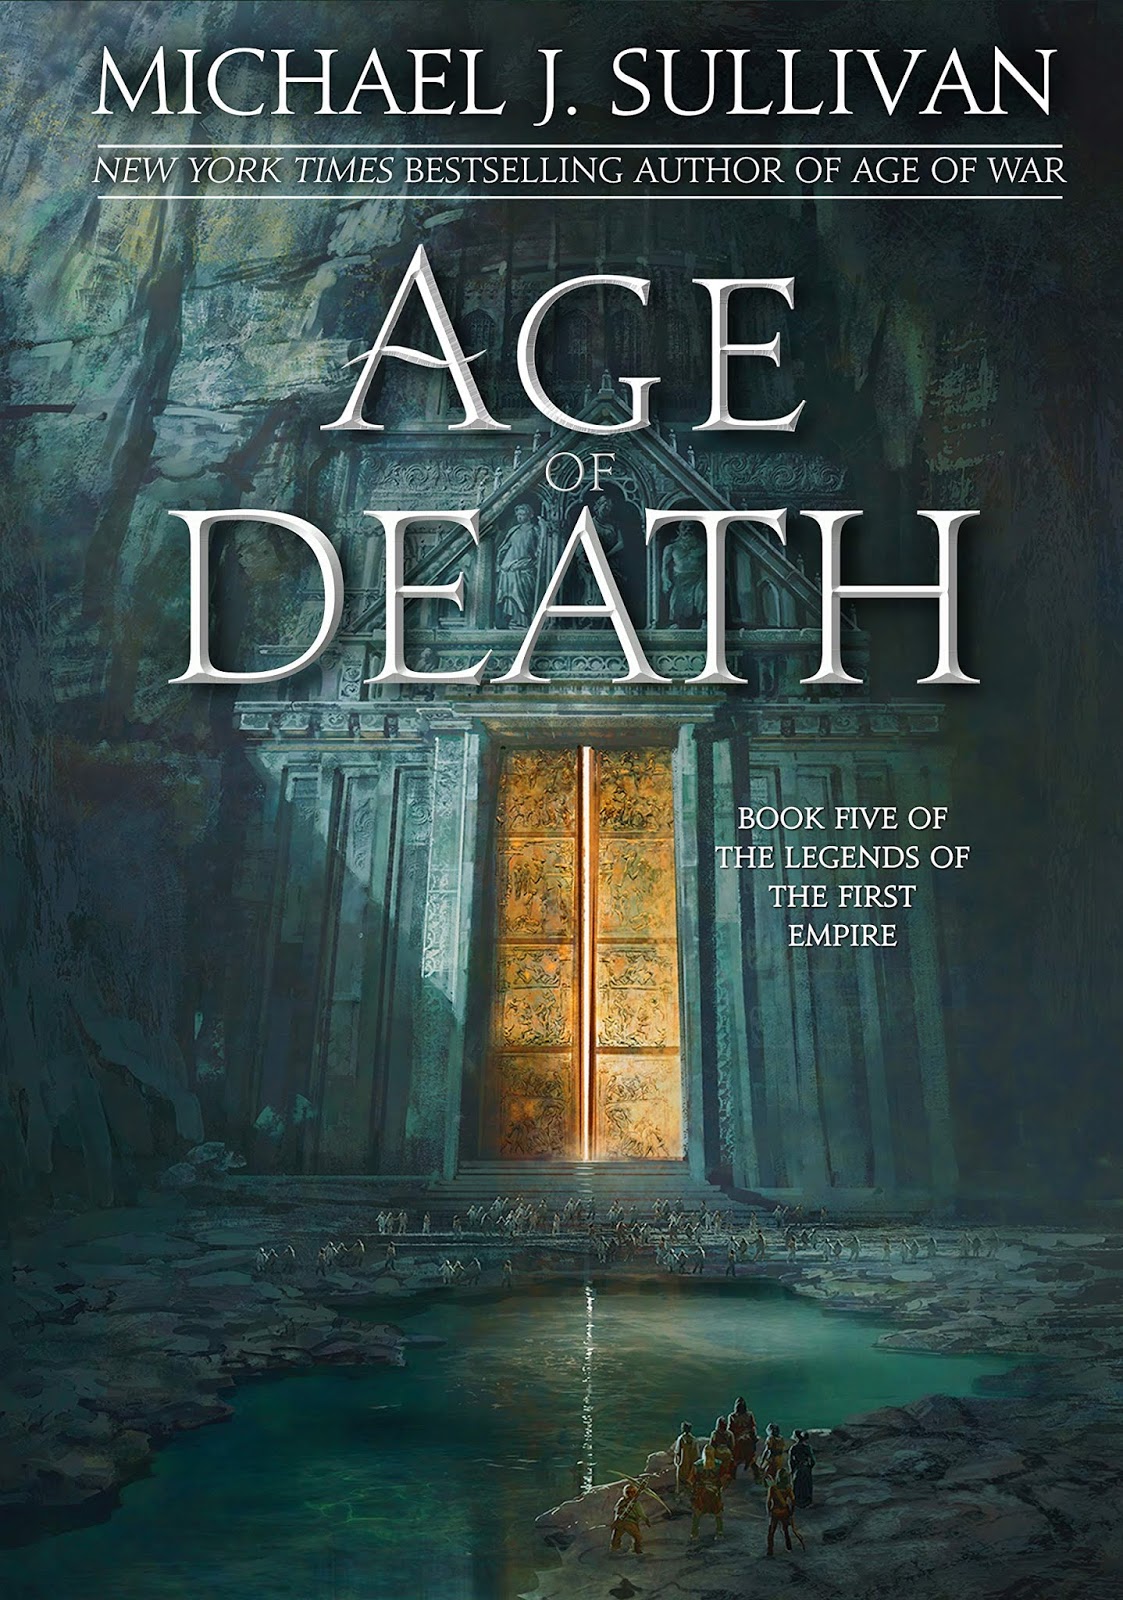  Age of Death by Michael J. Sullivan